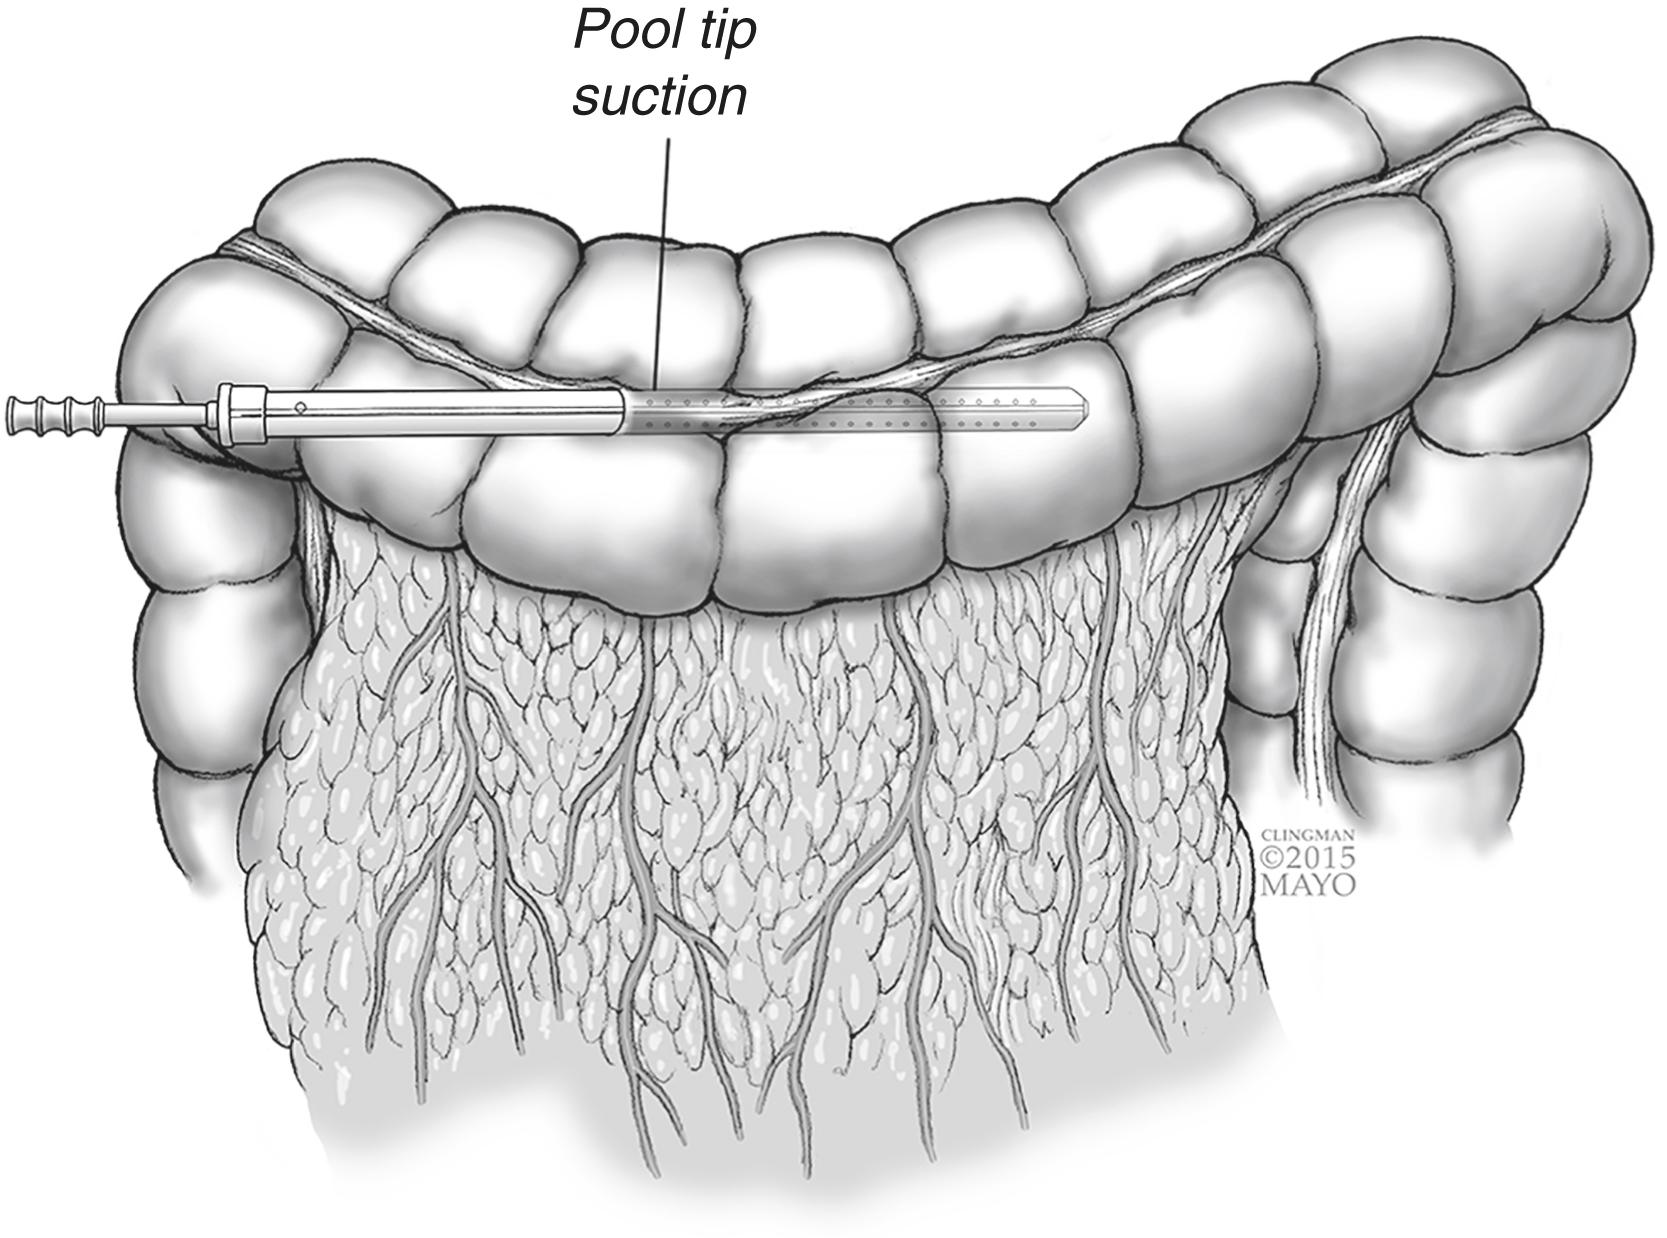 Figure 16.2, Pool suction decompression of colon.